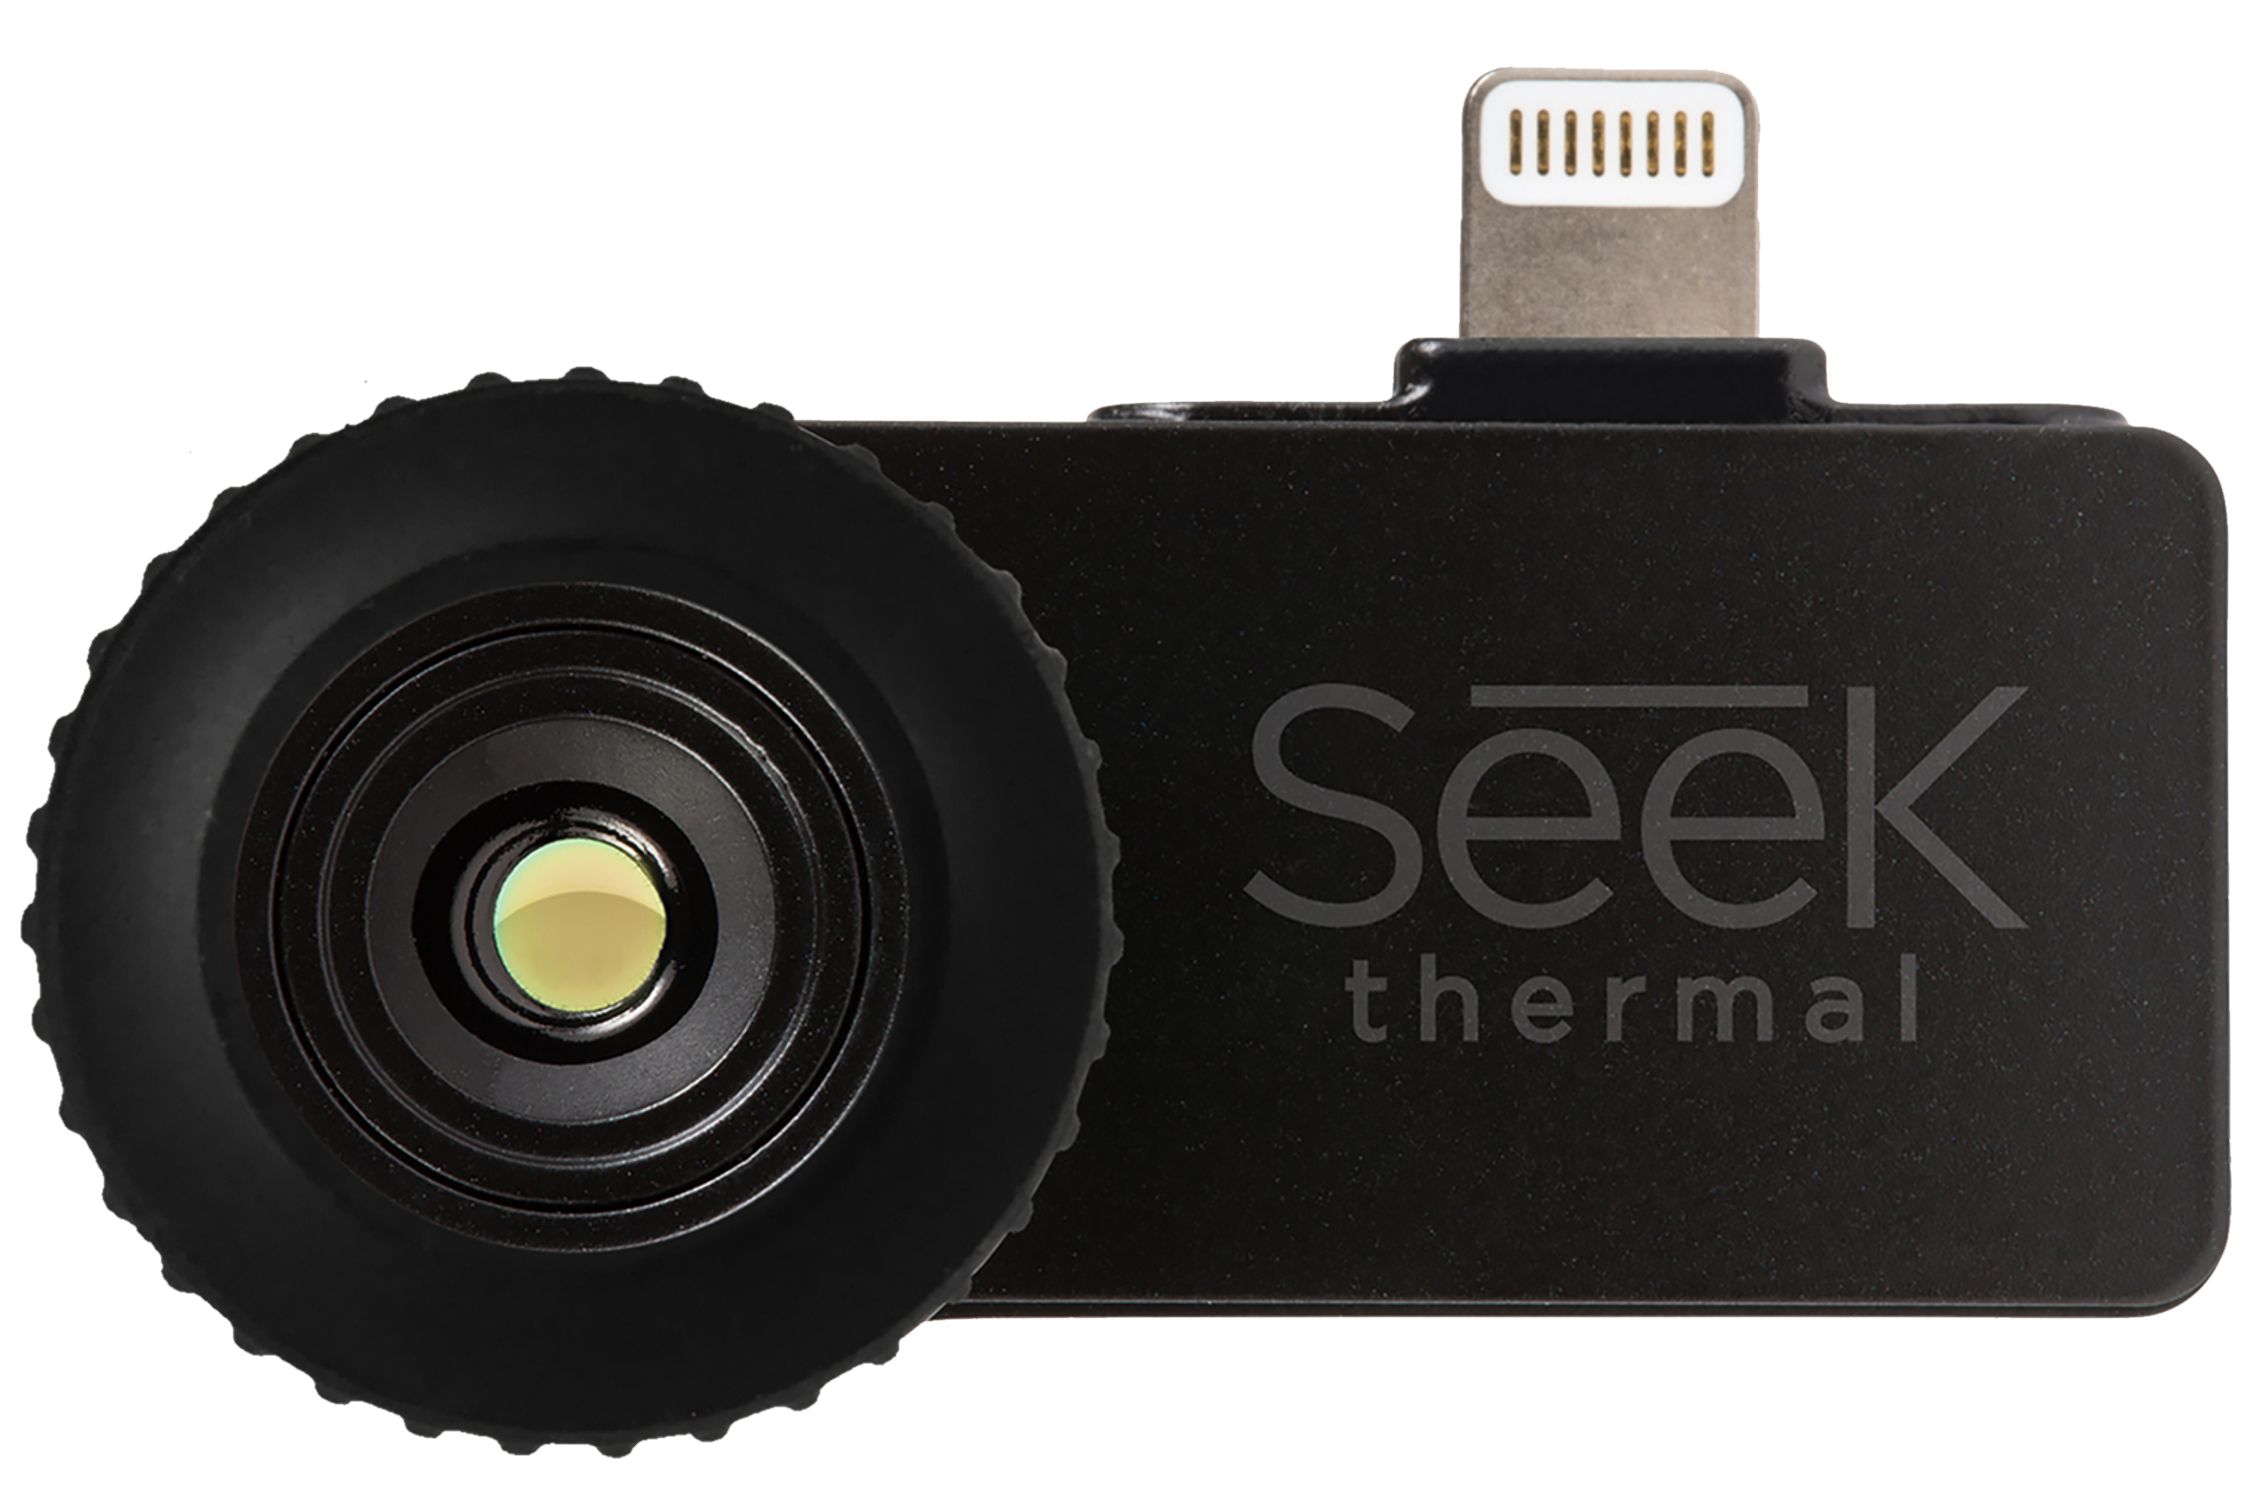 Seek Thermal Compact iOS Thermal imaging camera LW-EAA_1